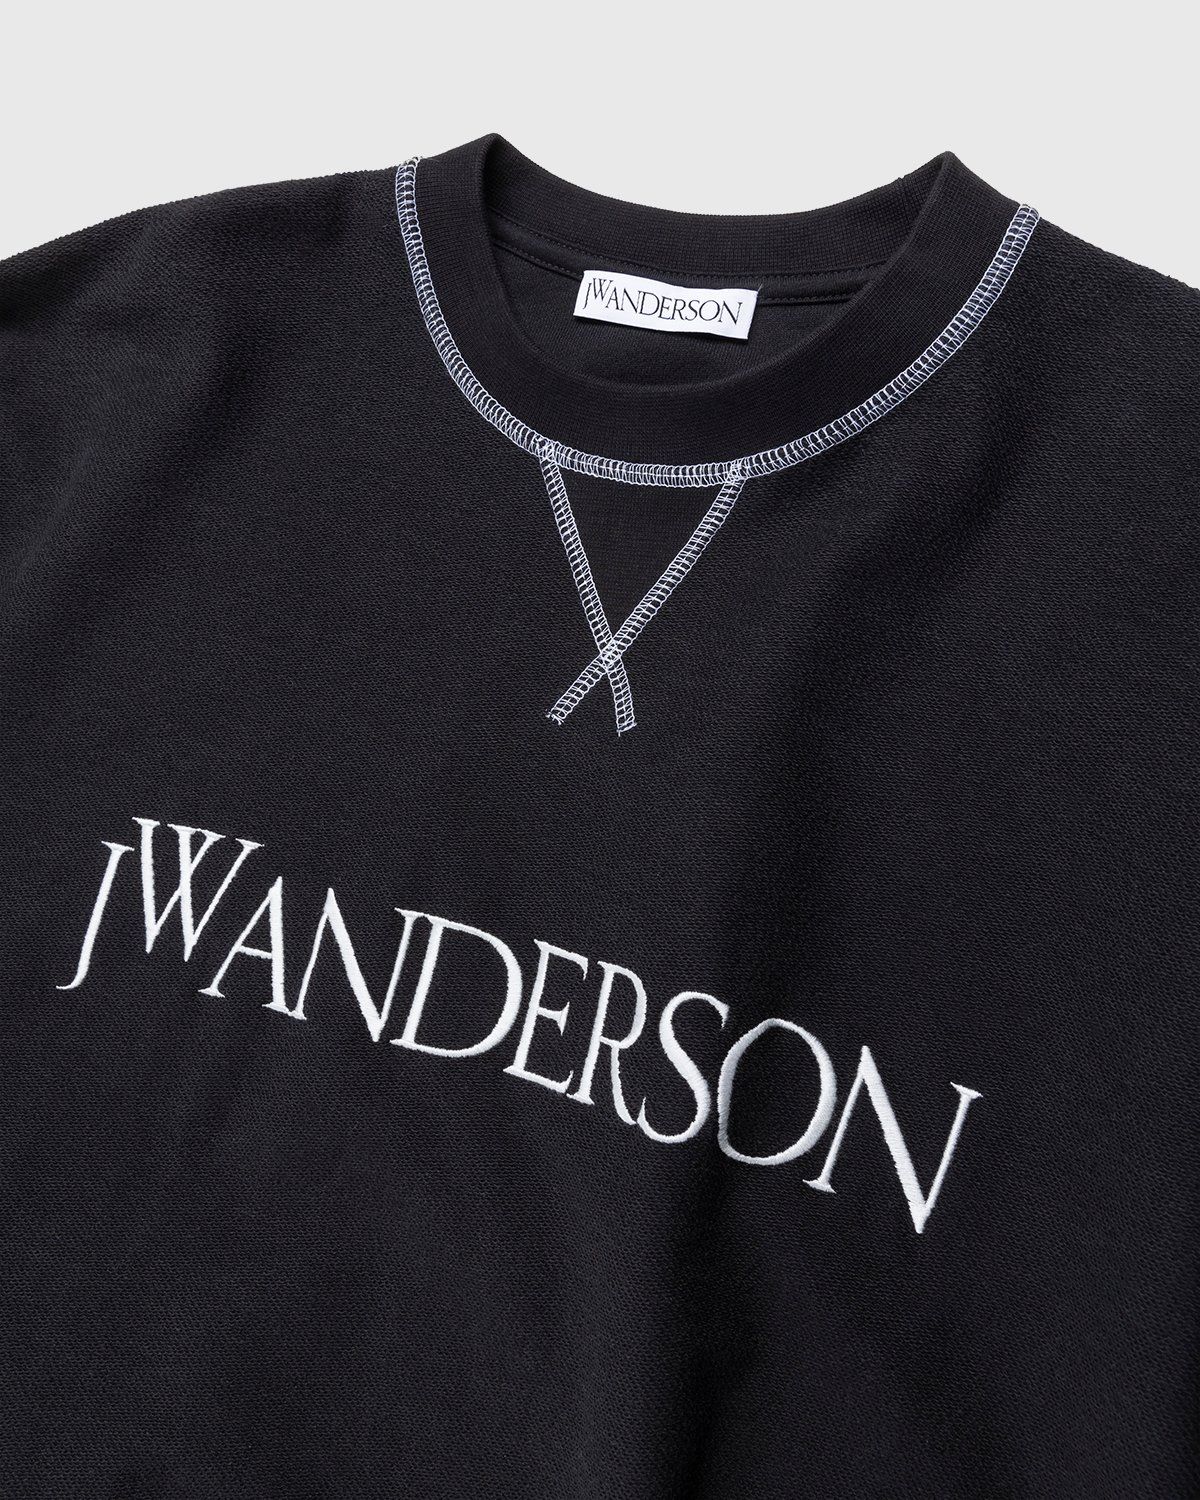 J.W. Anderson – Inside Out Contrast Sweatshirt Black - Sweatshirts - Black - Image 3